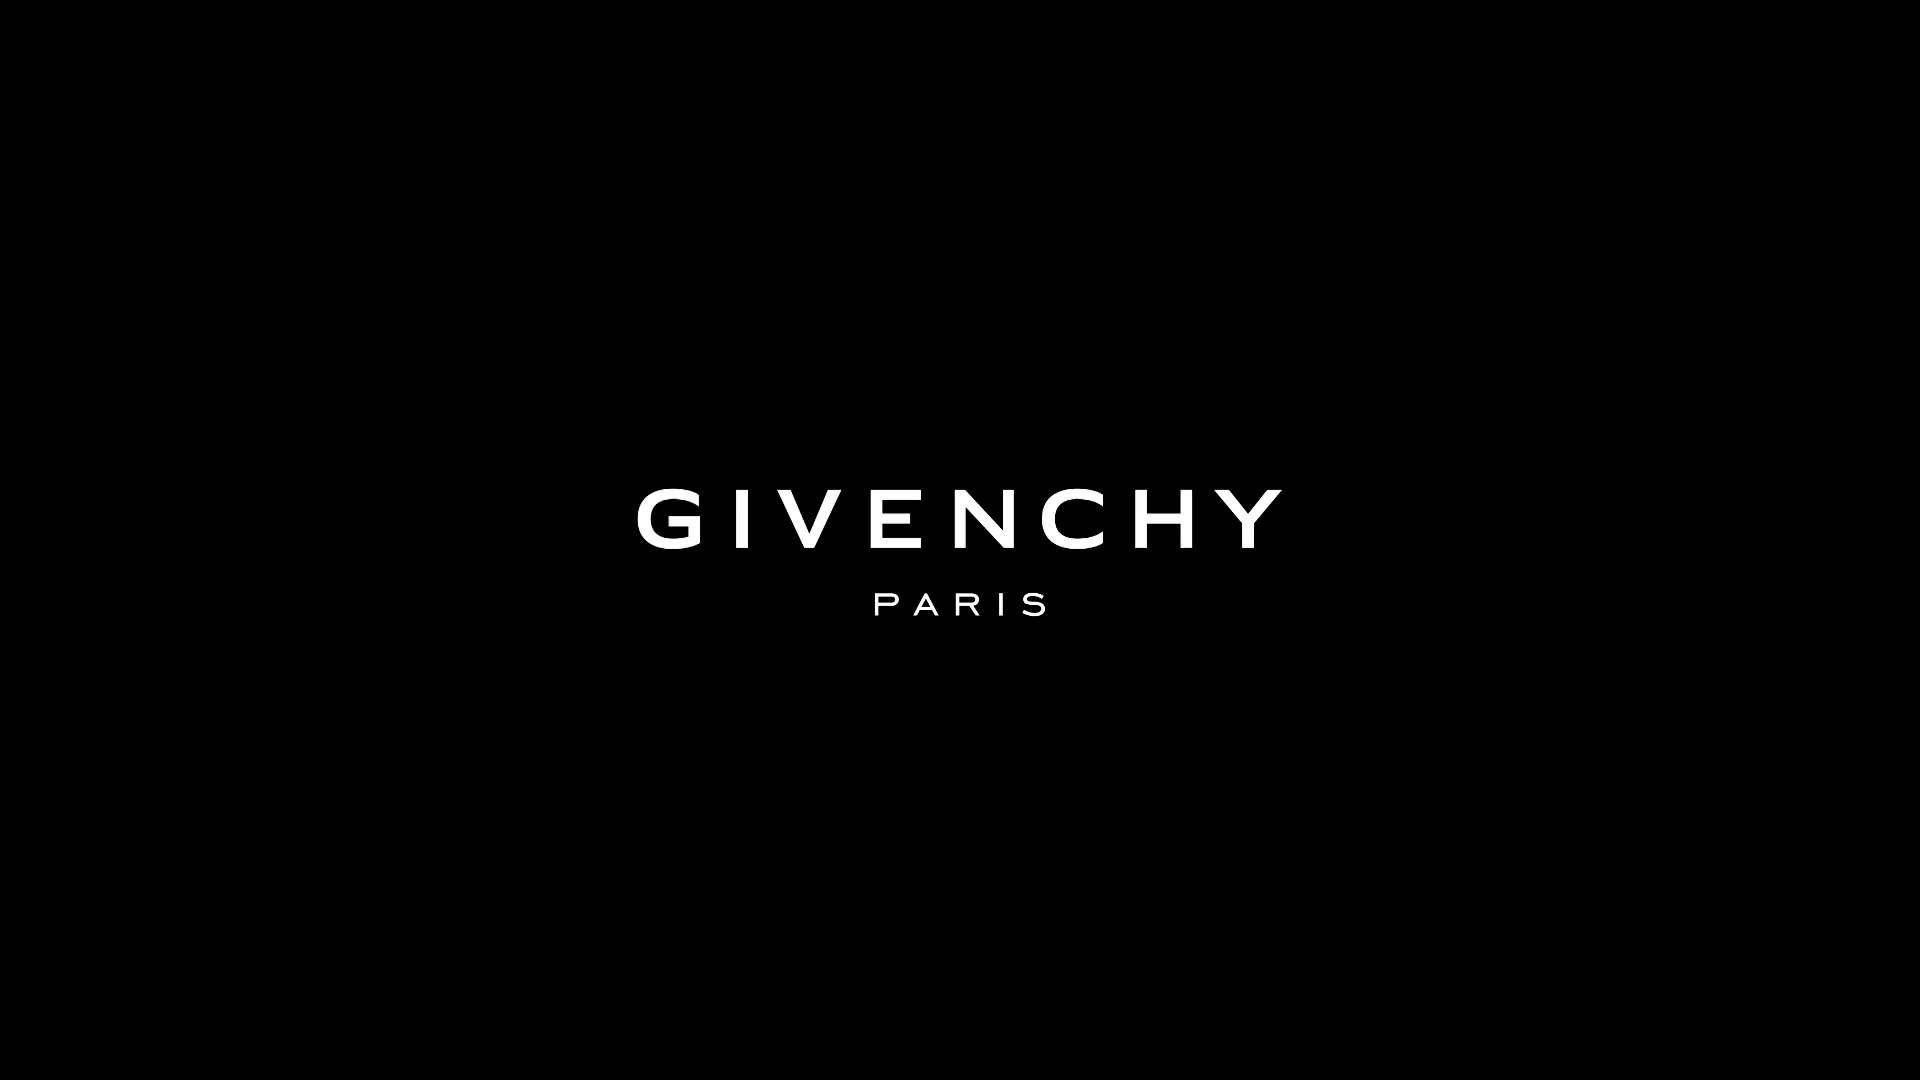 Download Givenchy Store Facade Wallpaper